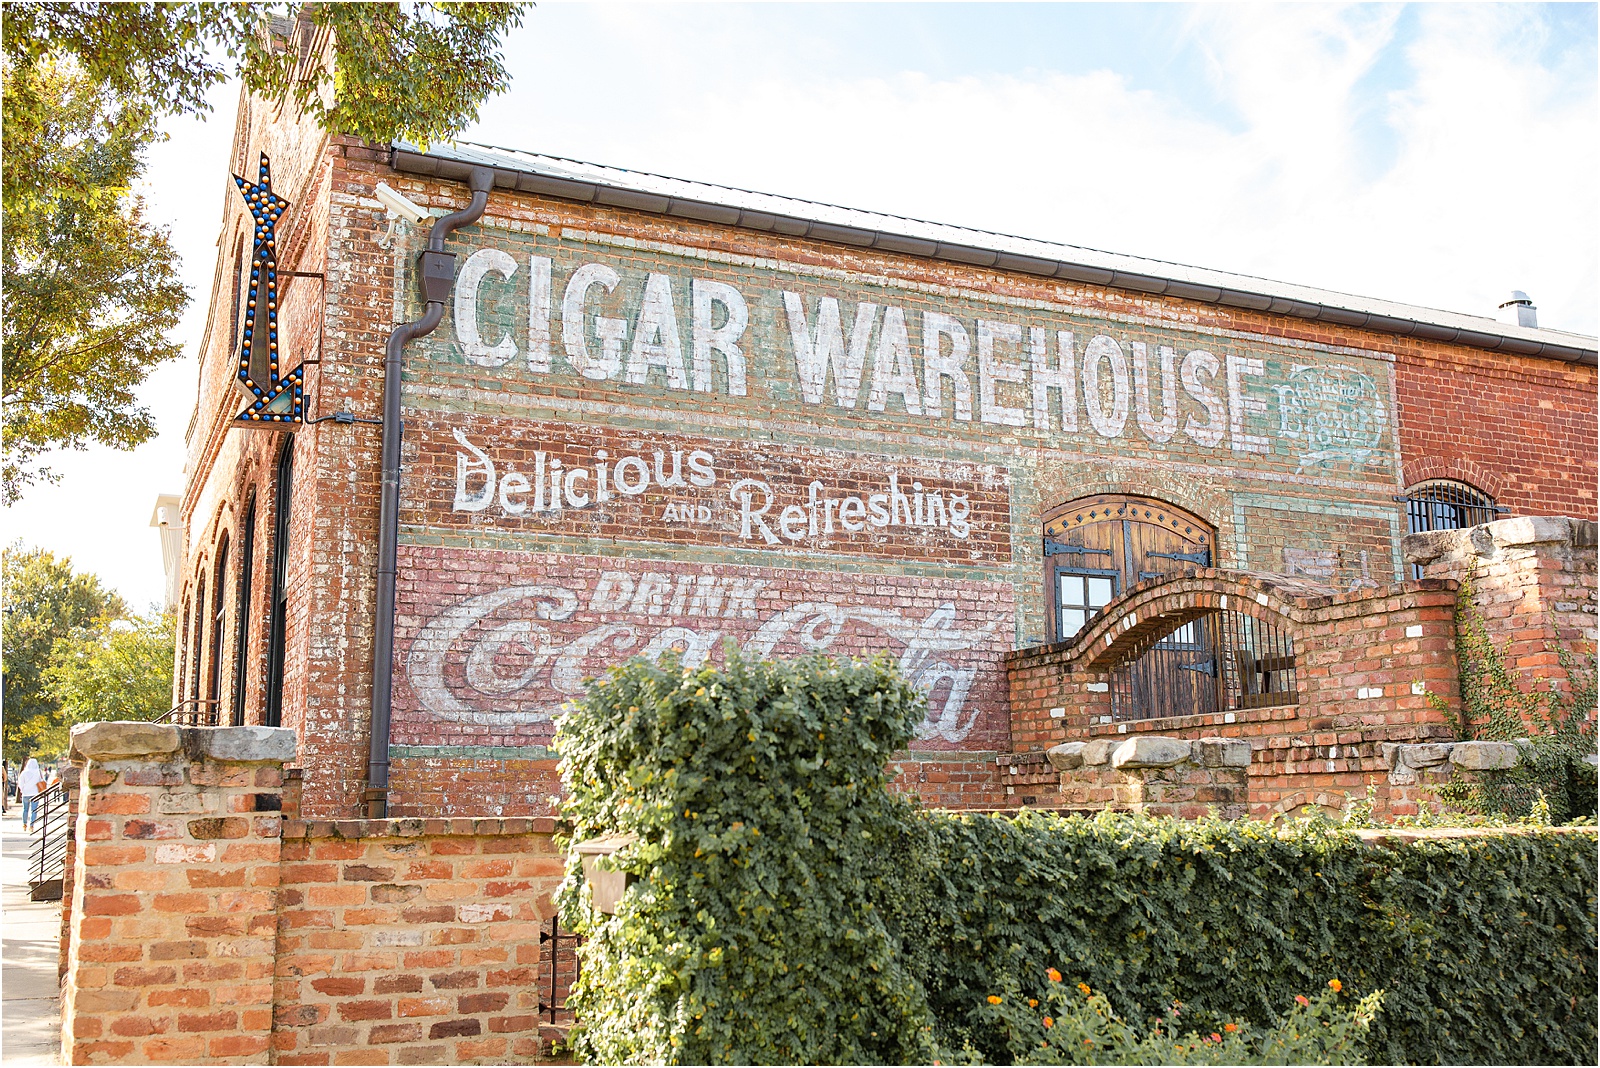 old cigar warehouse photographer